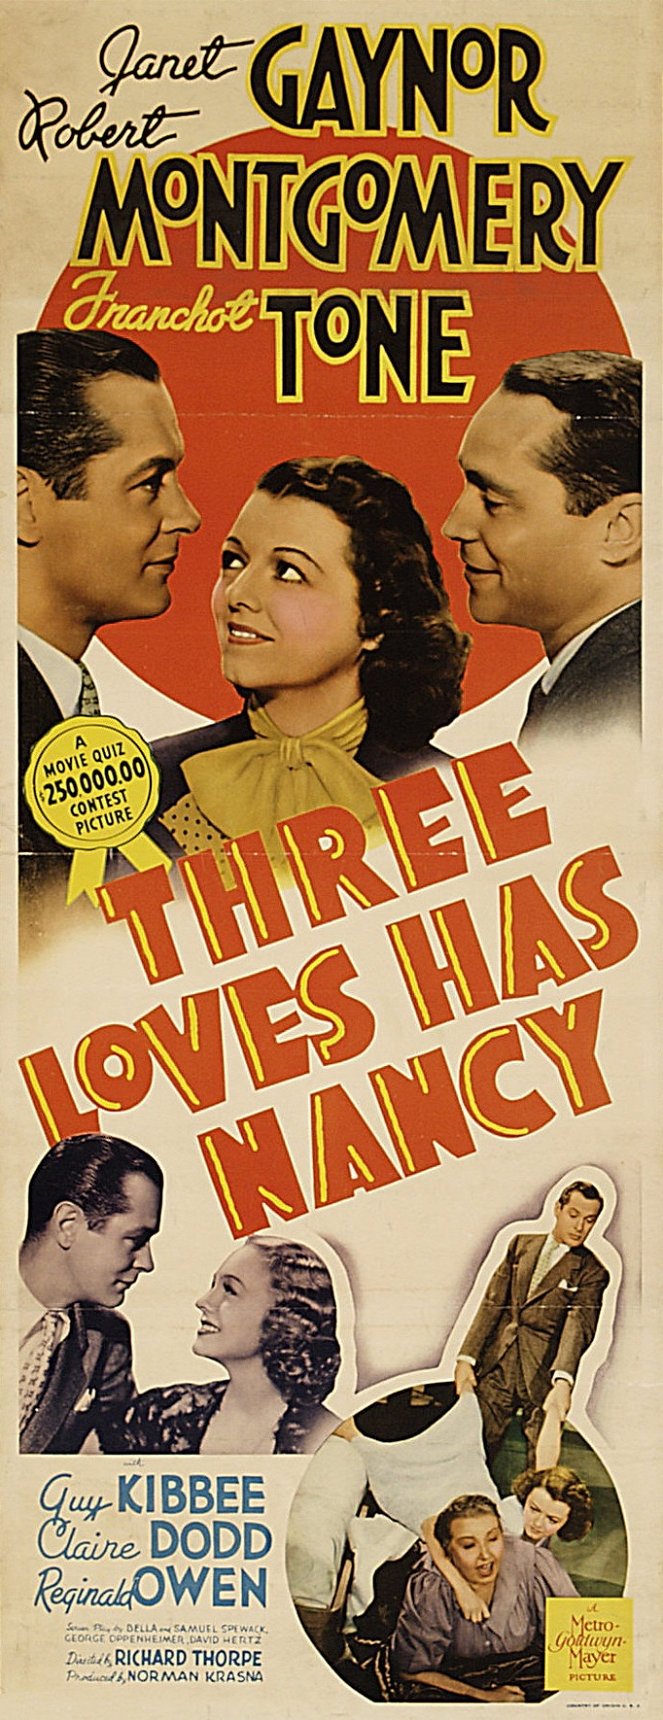 Three Loves Has Nancy - Posters